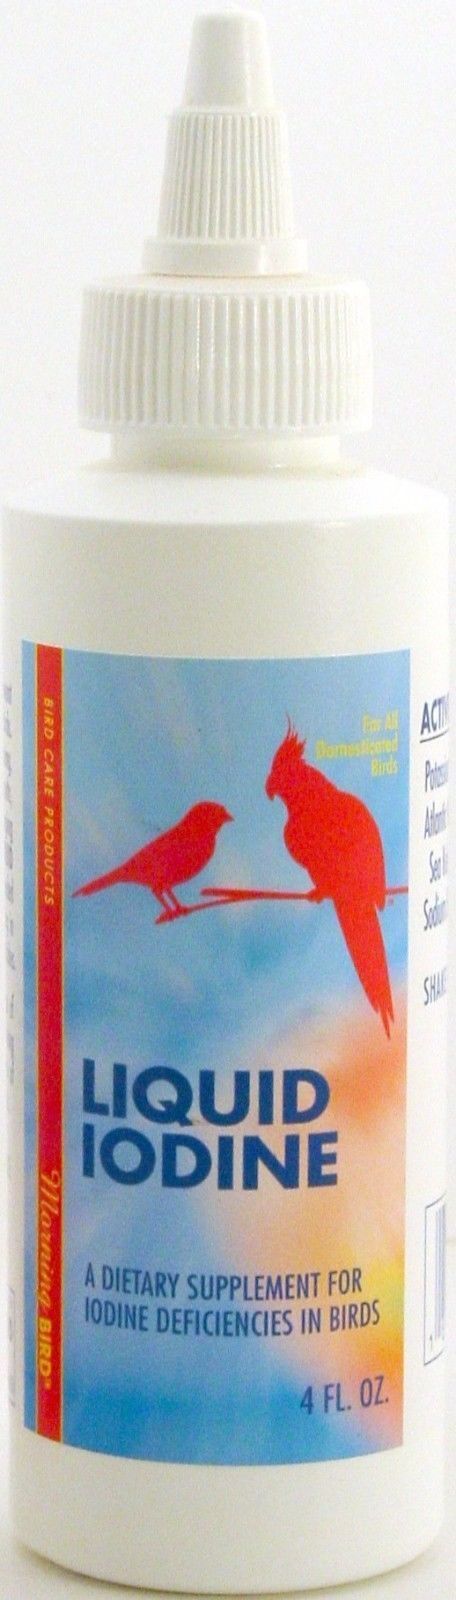 Liquid Iodine - Dietary Supplement for Deficiencies in Birds (2 OZ) exp02/24